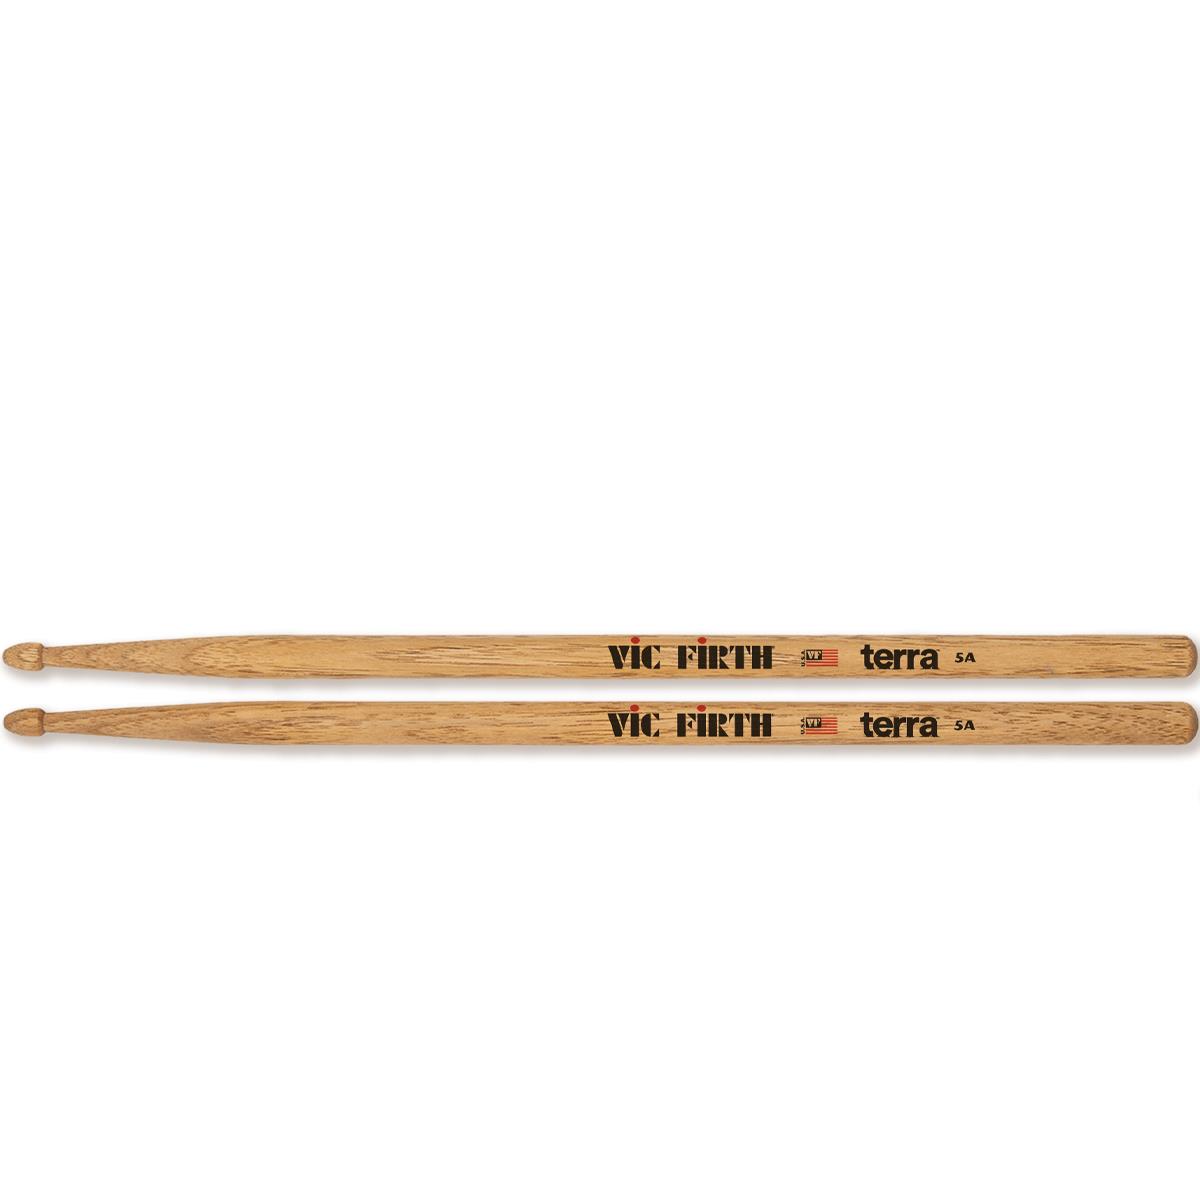 

Vic Firth American Classic Terra Series 5A Drumsticks, Wood Tip, Pair